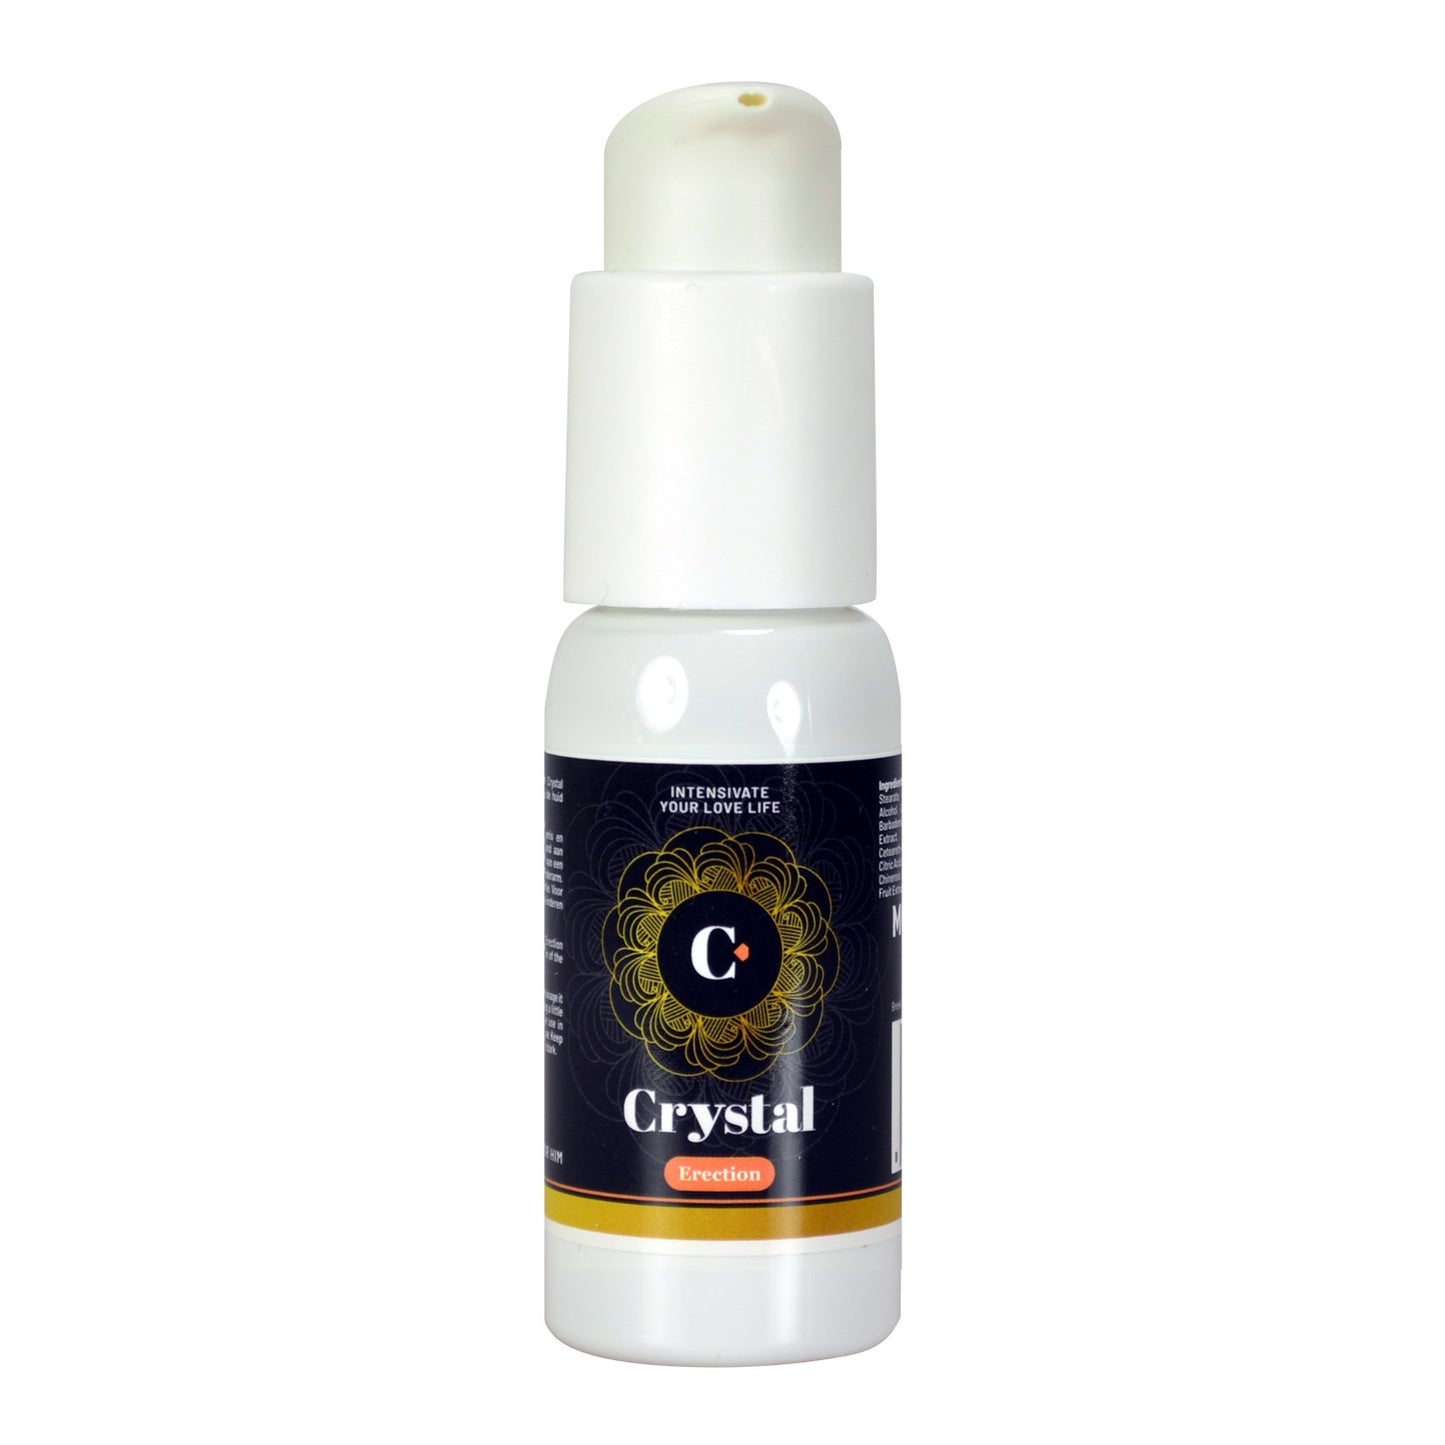 Morningstar - Crystal erection cream - For Men - 50ml - pump with cream - 228